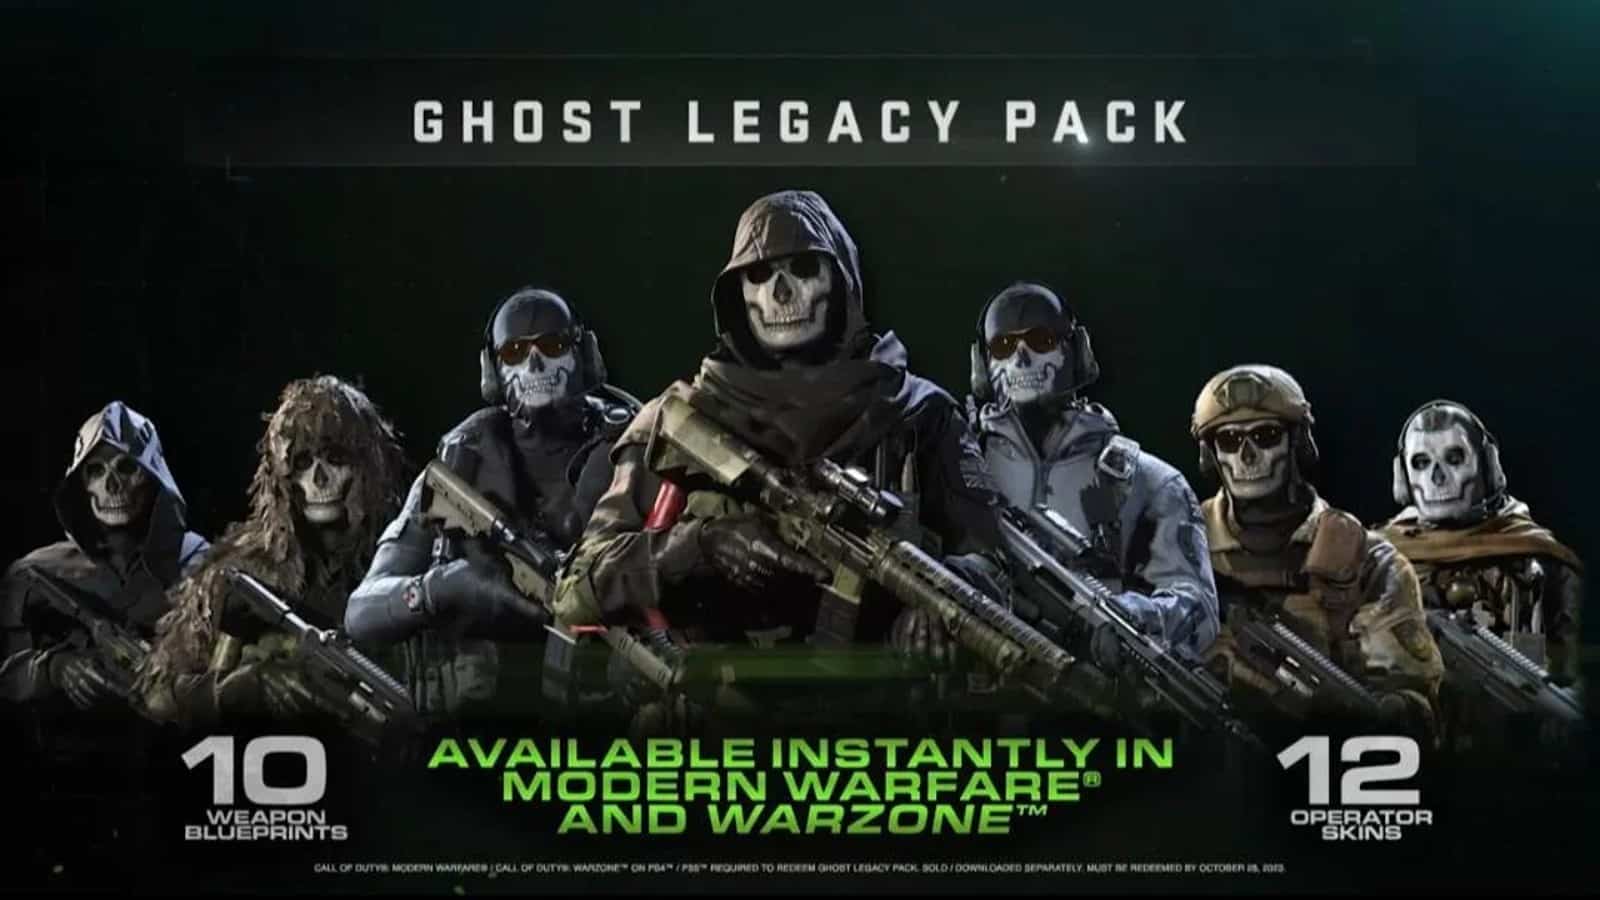 Modern Warfare II Preorder Bonuses, Vault Edition and More Details